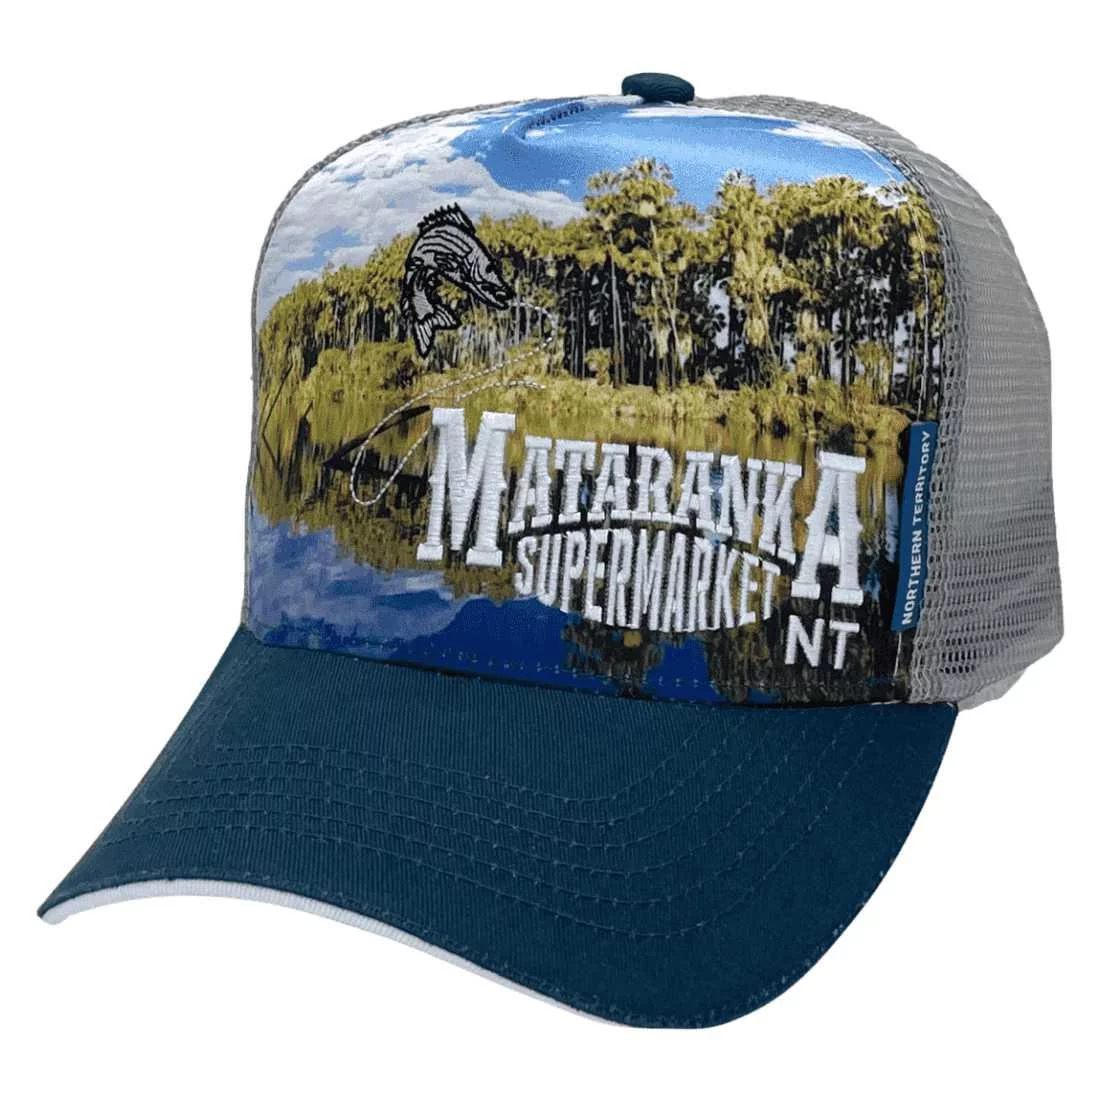 Mataranka Supermarket NT HP Original Basic Aussie Trucker Hat with Australian Head Fit Crown Snapback